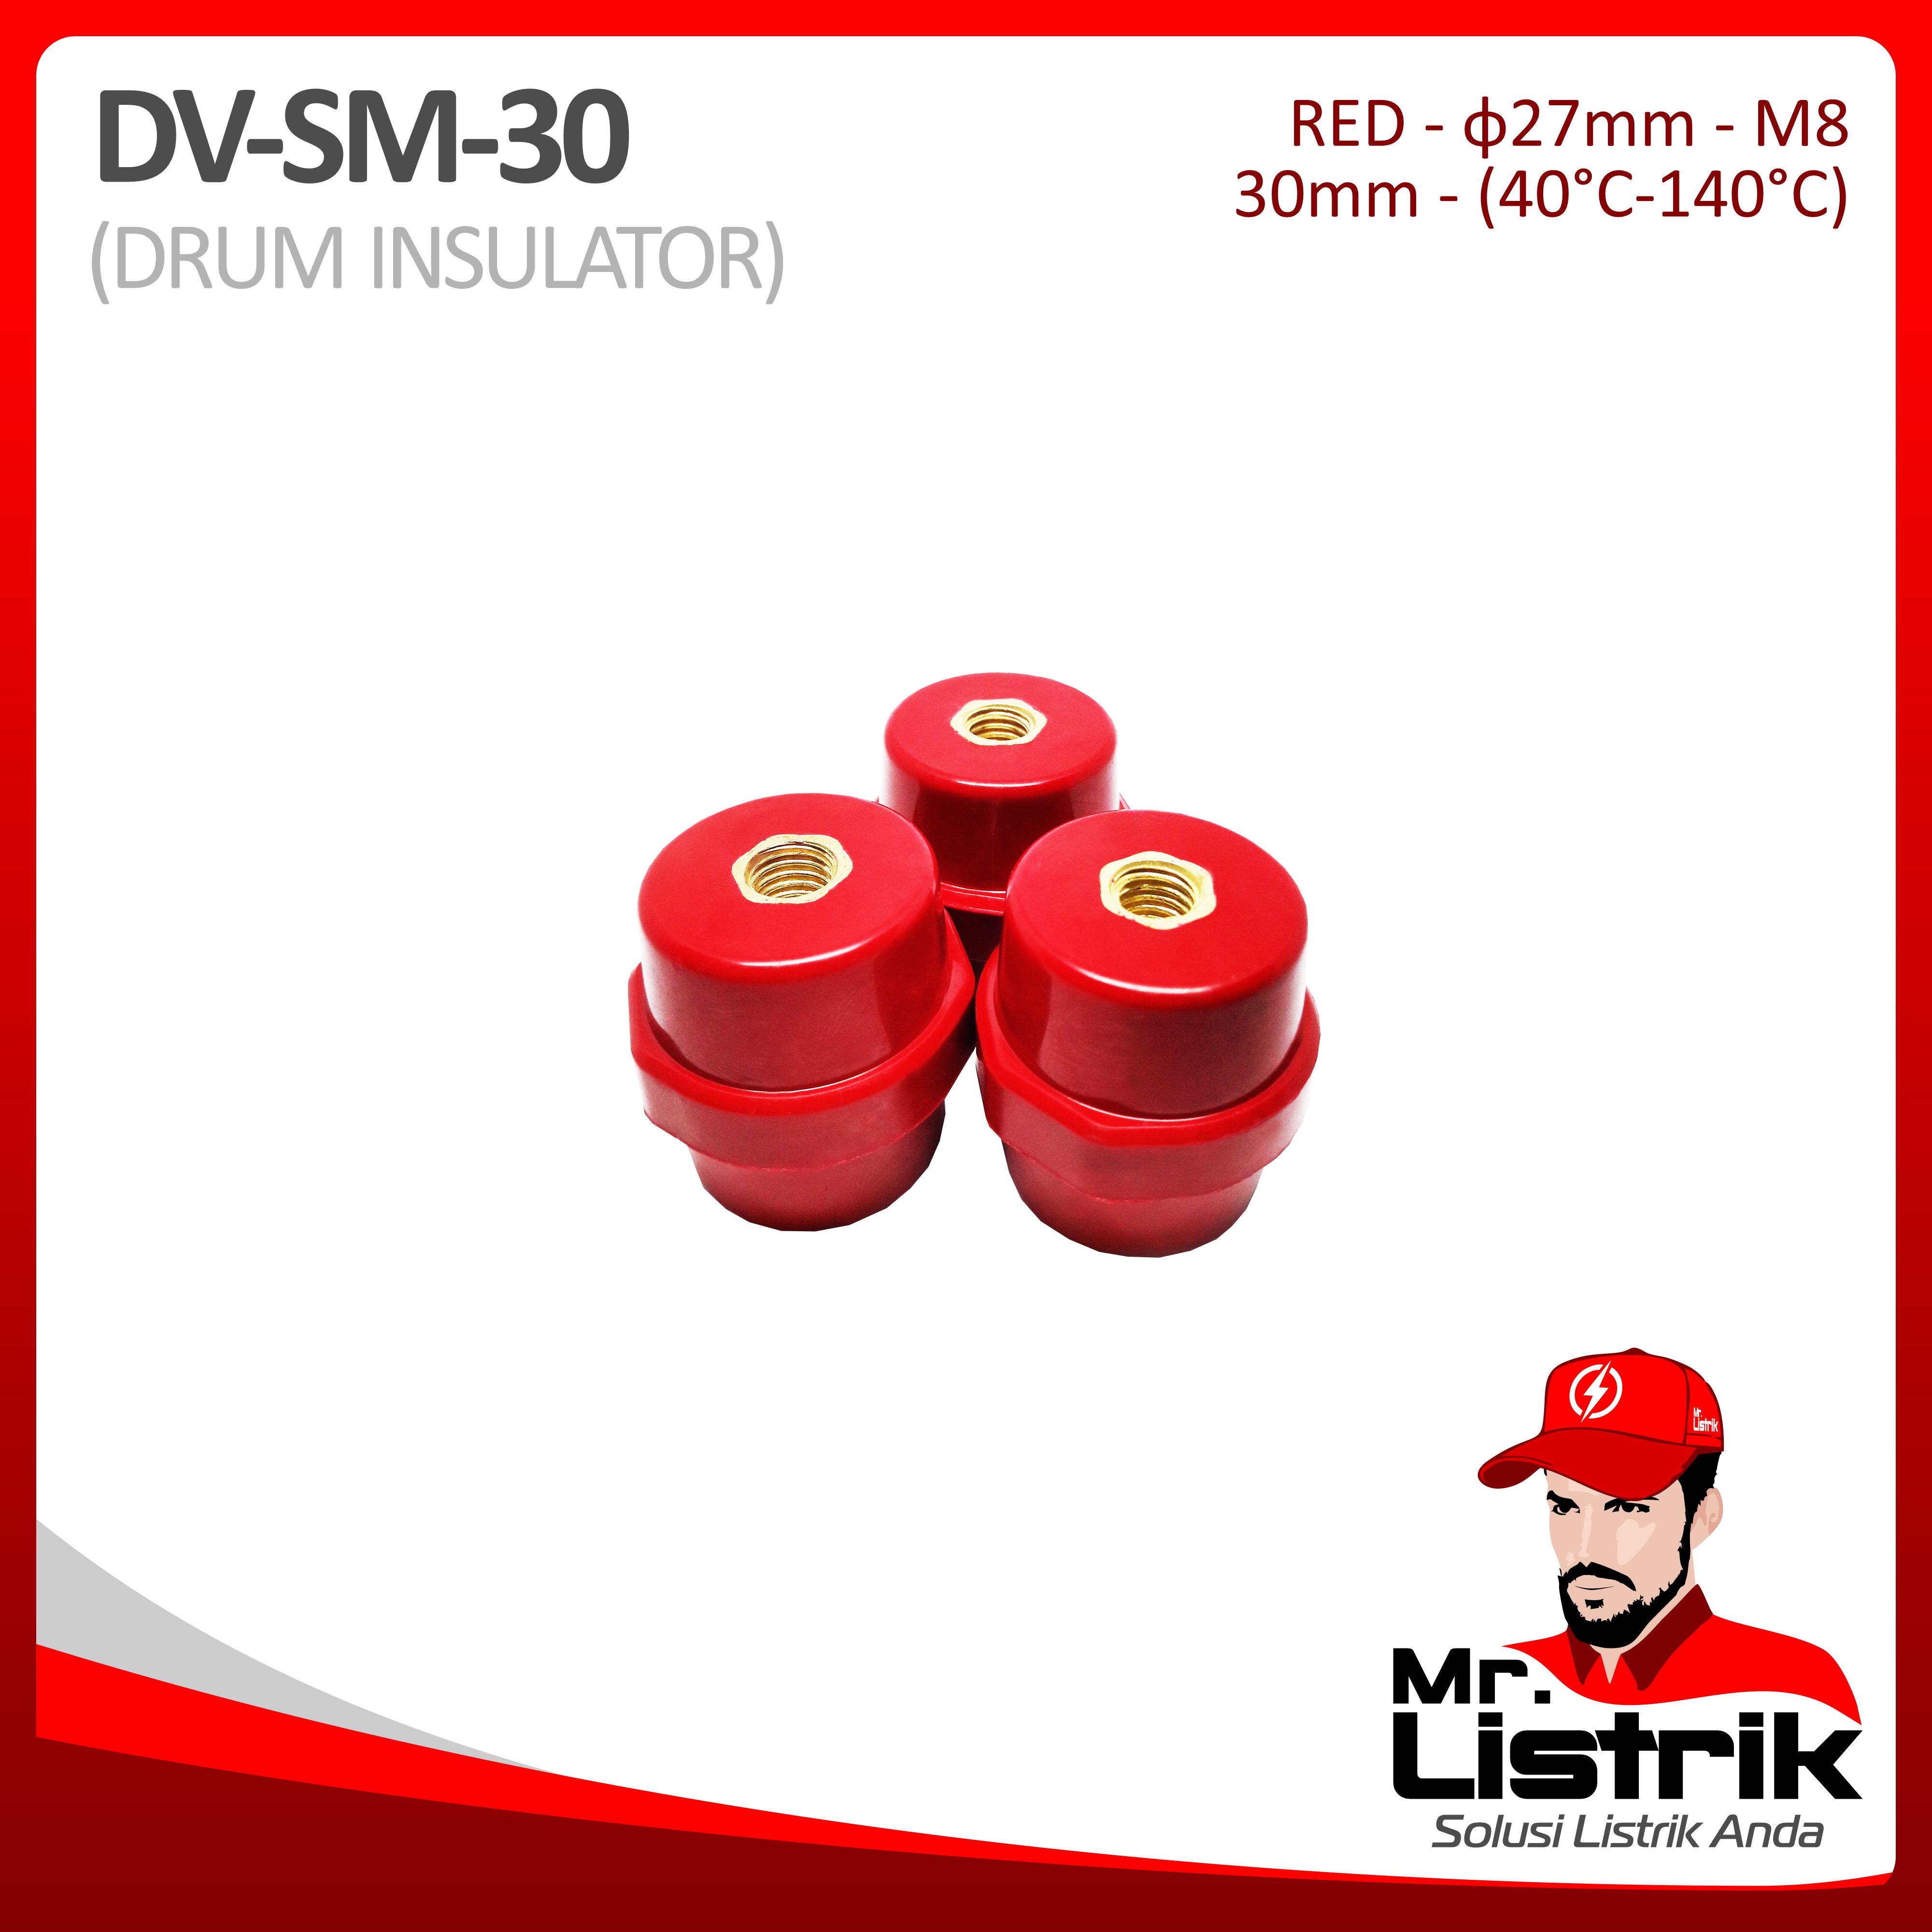 Drum Insulator Rekolit DV SM-30